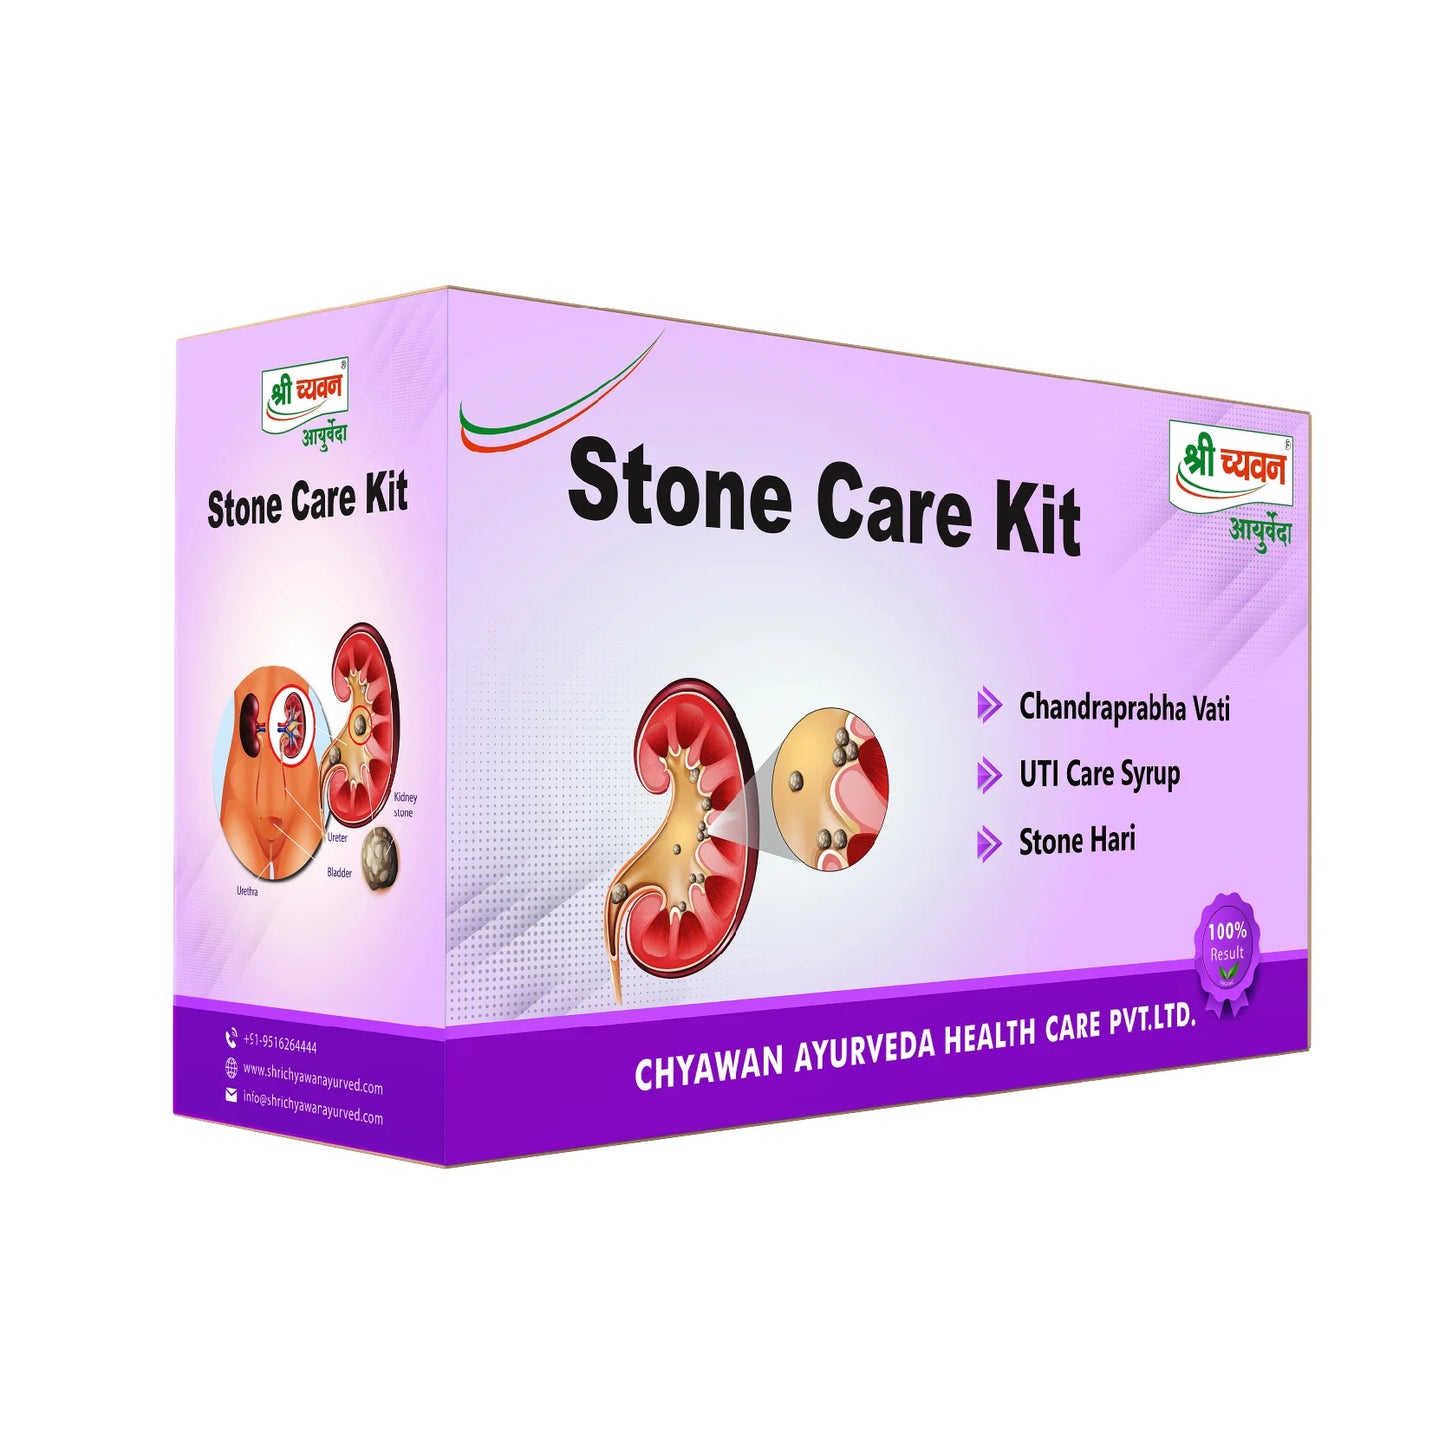 Stone care kit for kidney stone